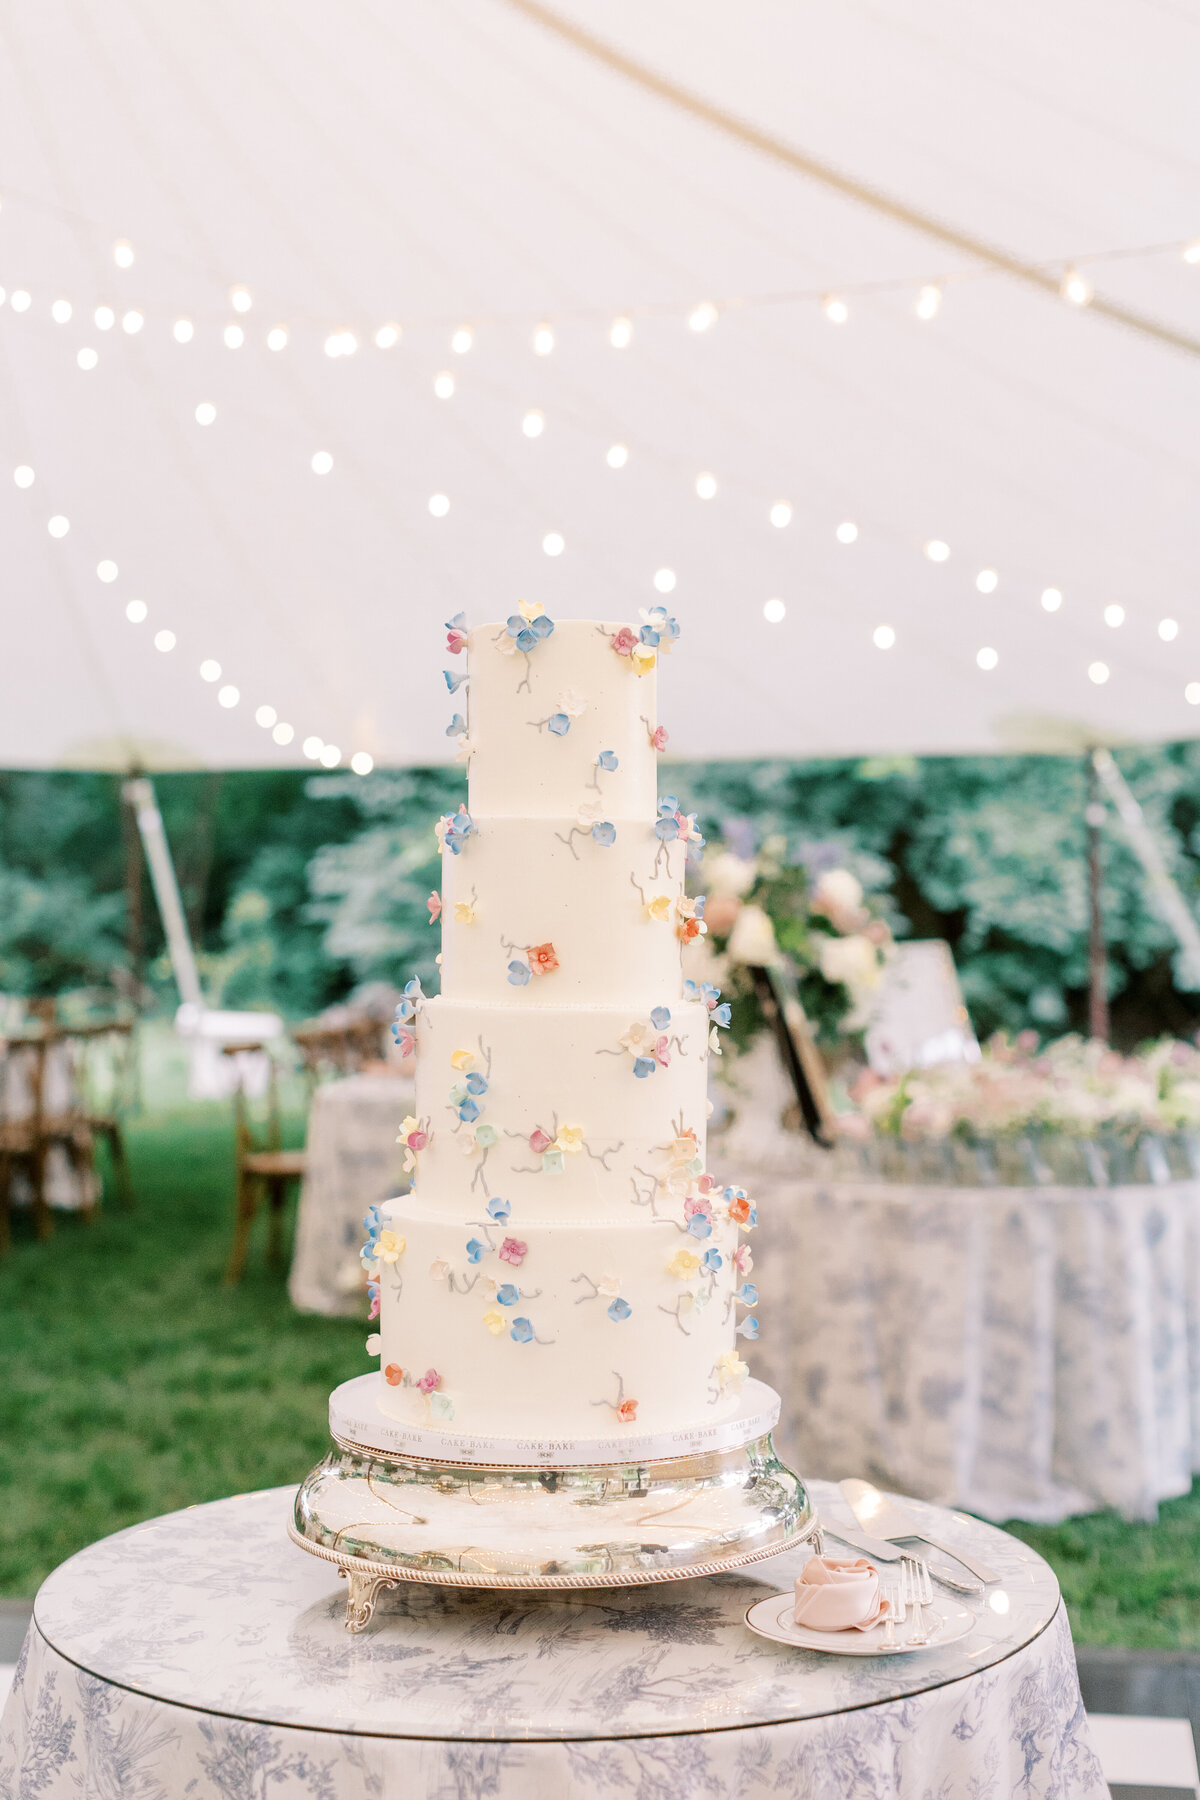 The Cake Bake Shop 4-tiered wedding cake